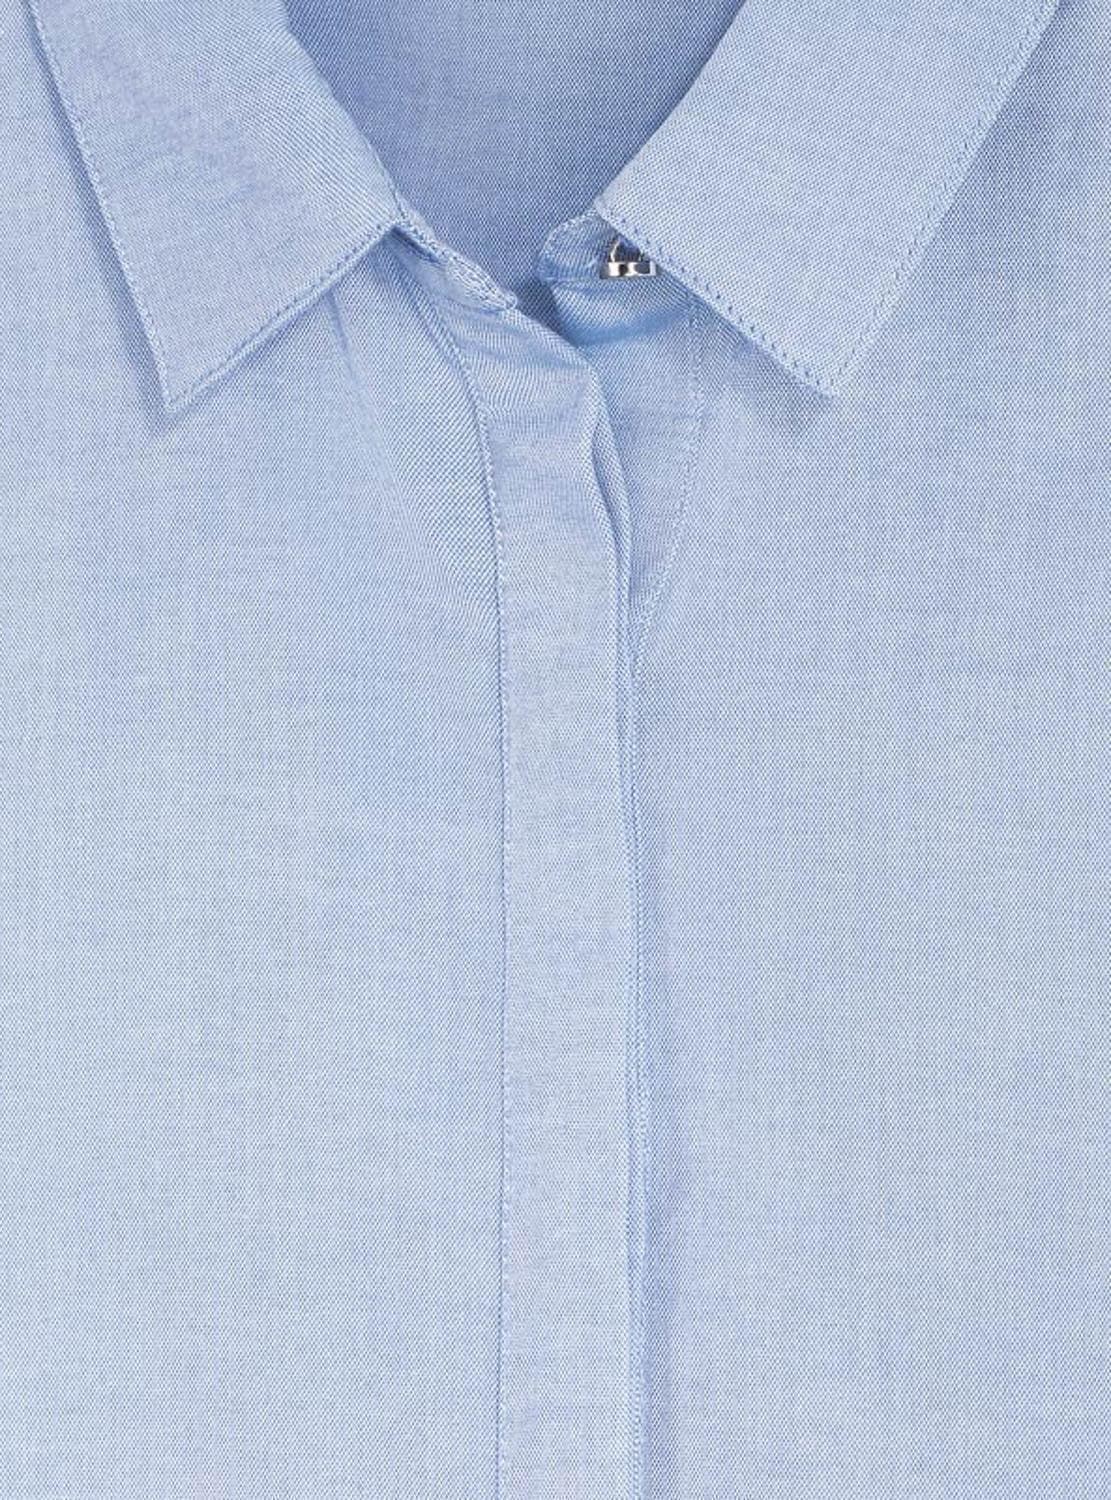 Camisa oxford azul - Imagen 3